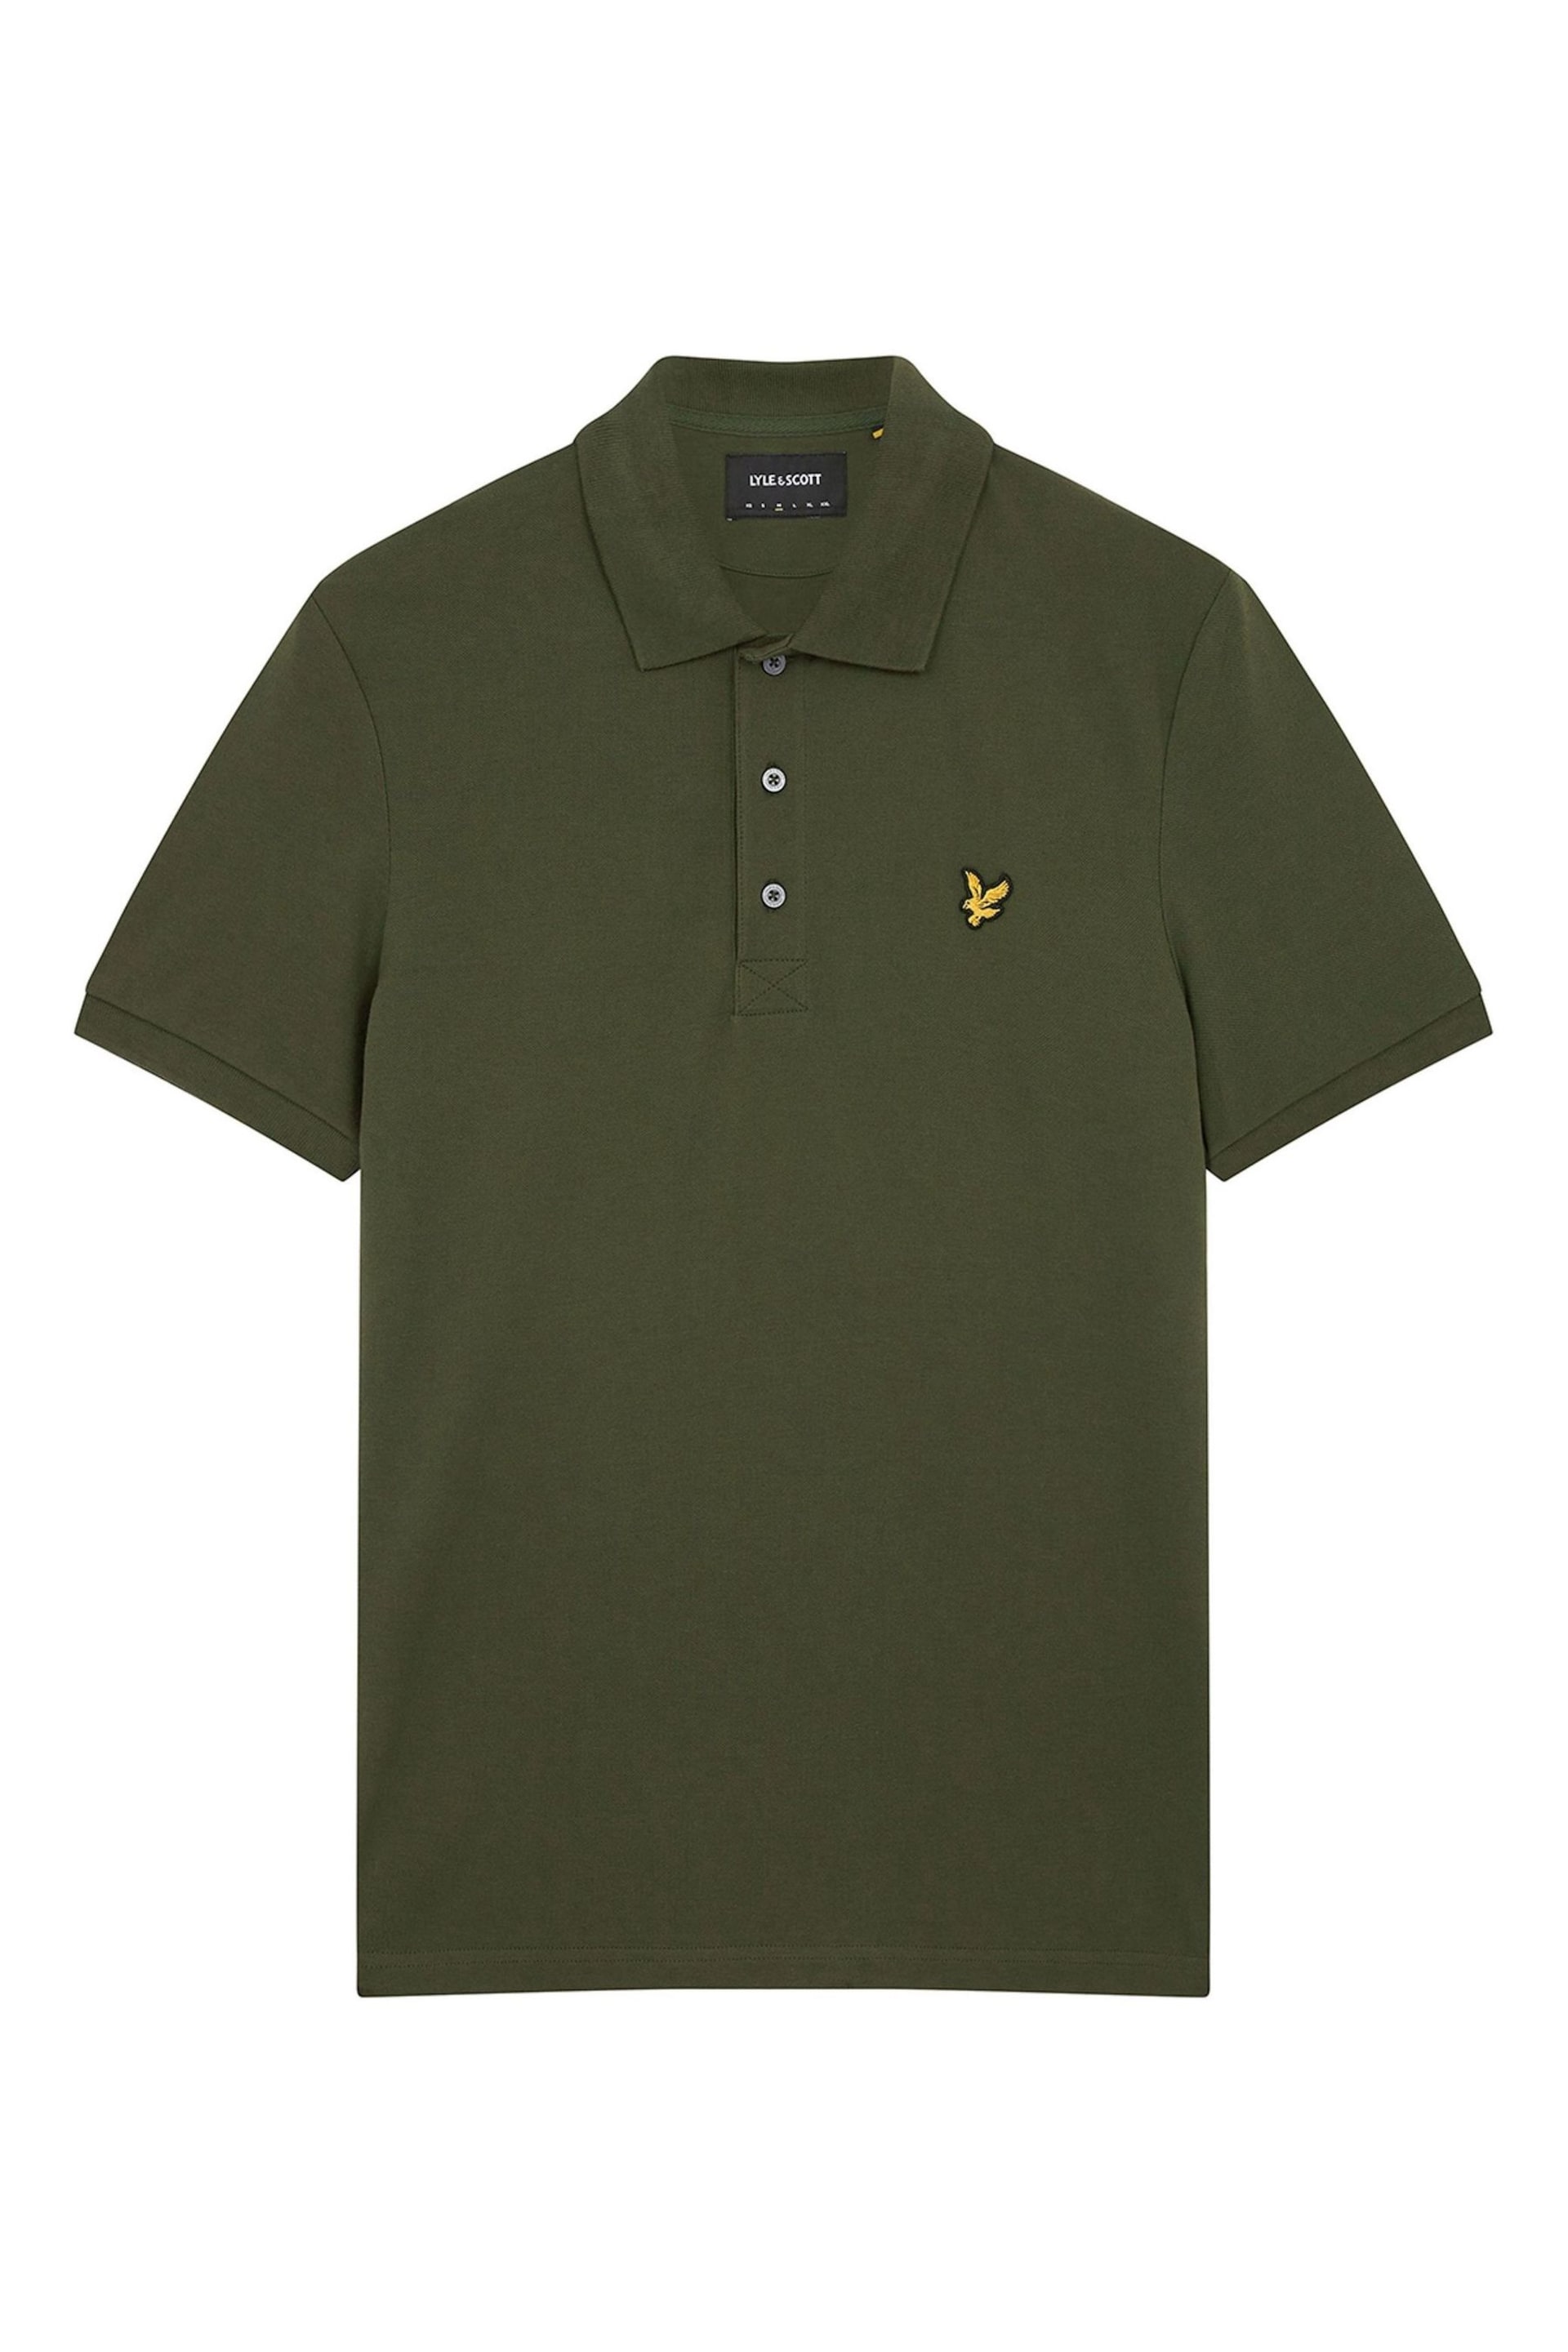 Lyle & Scott Green Plain Polo Shirt - Image 5 of 5